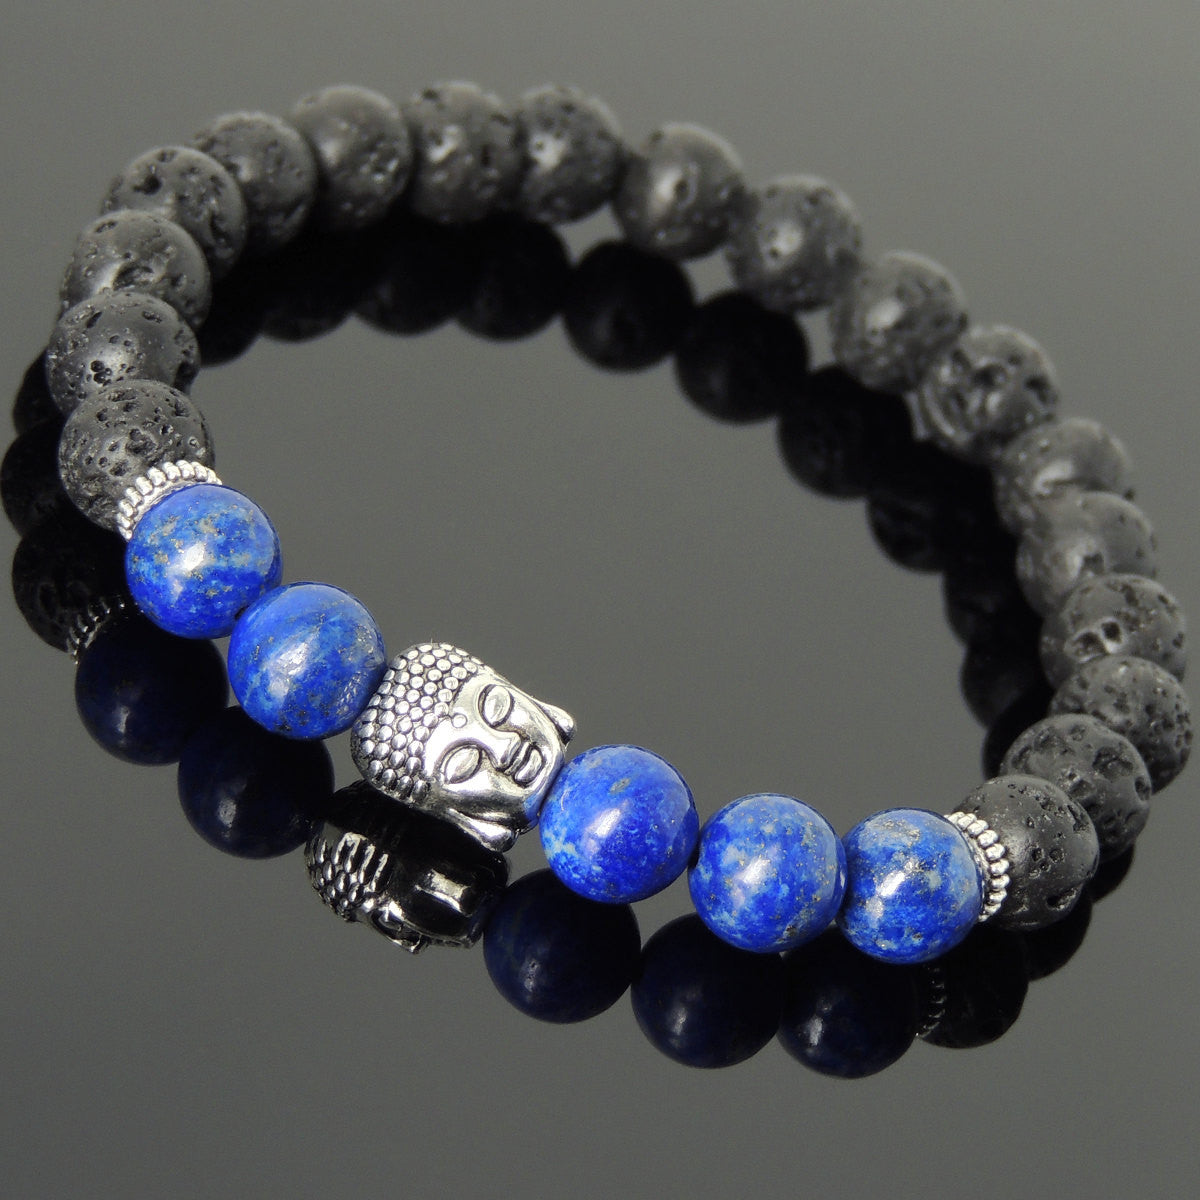 Lapis Lazuli & Lava Rock Healing Gemstone Bracelet with Tibetan Silver Sakyamuni Buddha & Spacers - Handmade by Gem & Silver TSB181